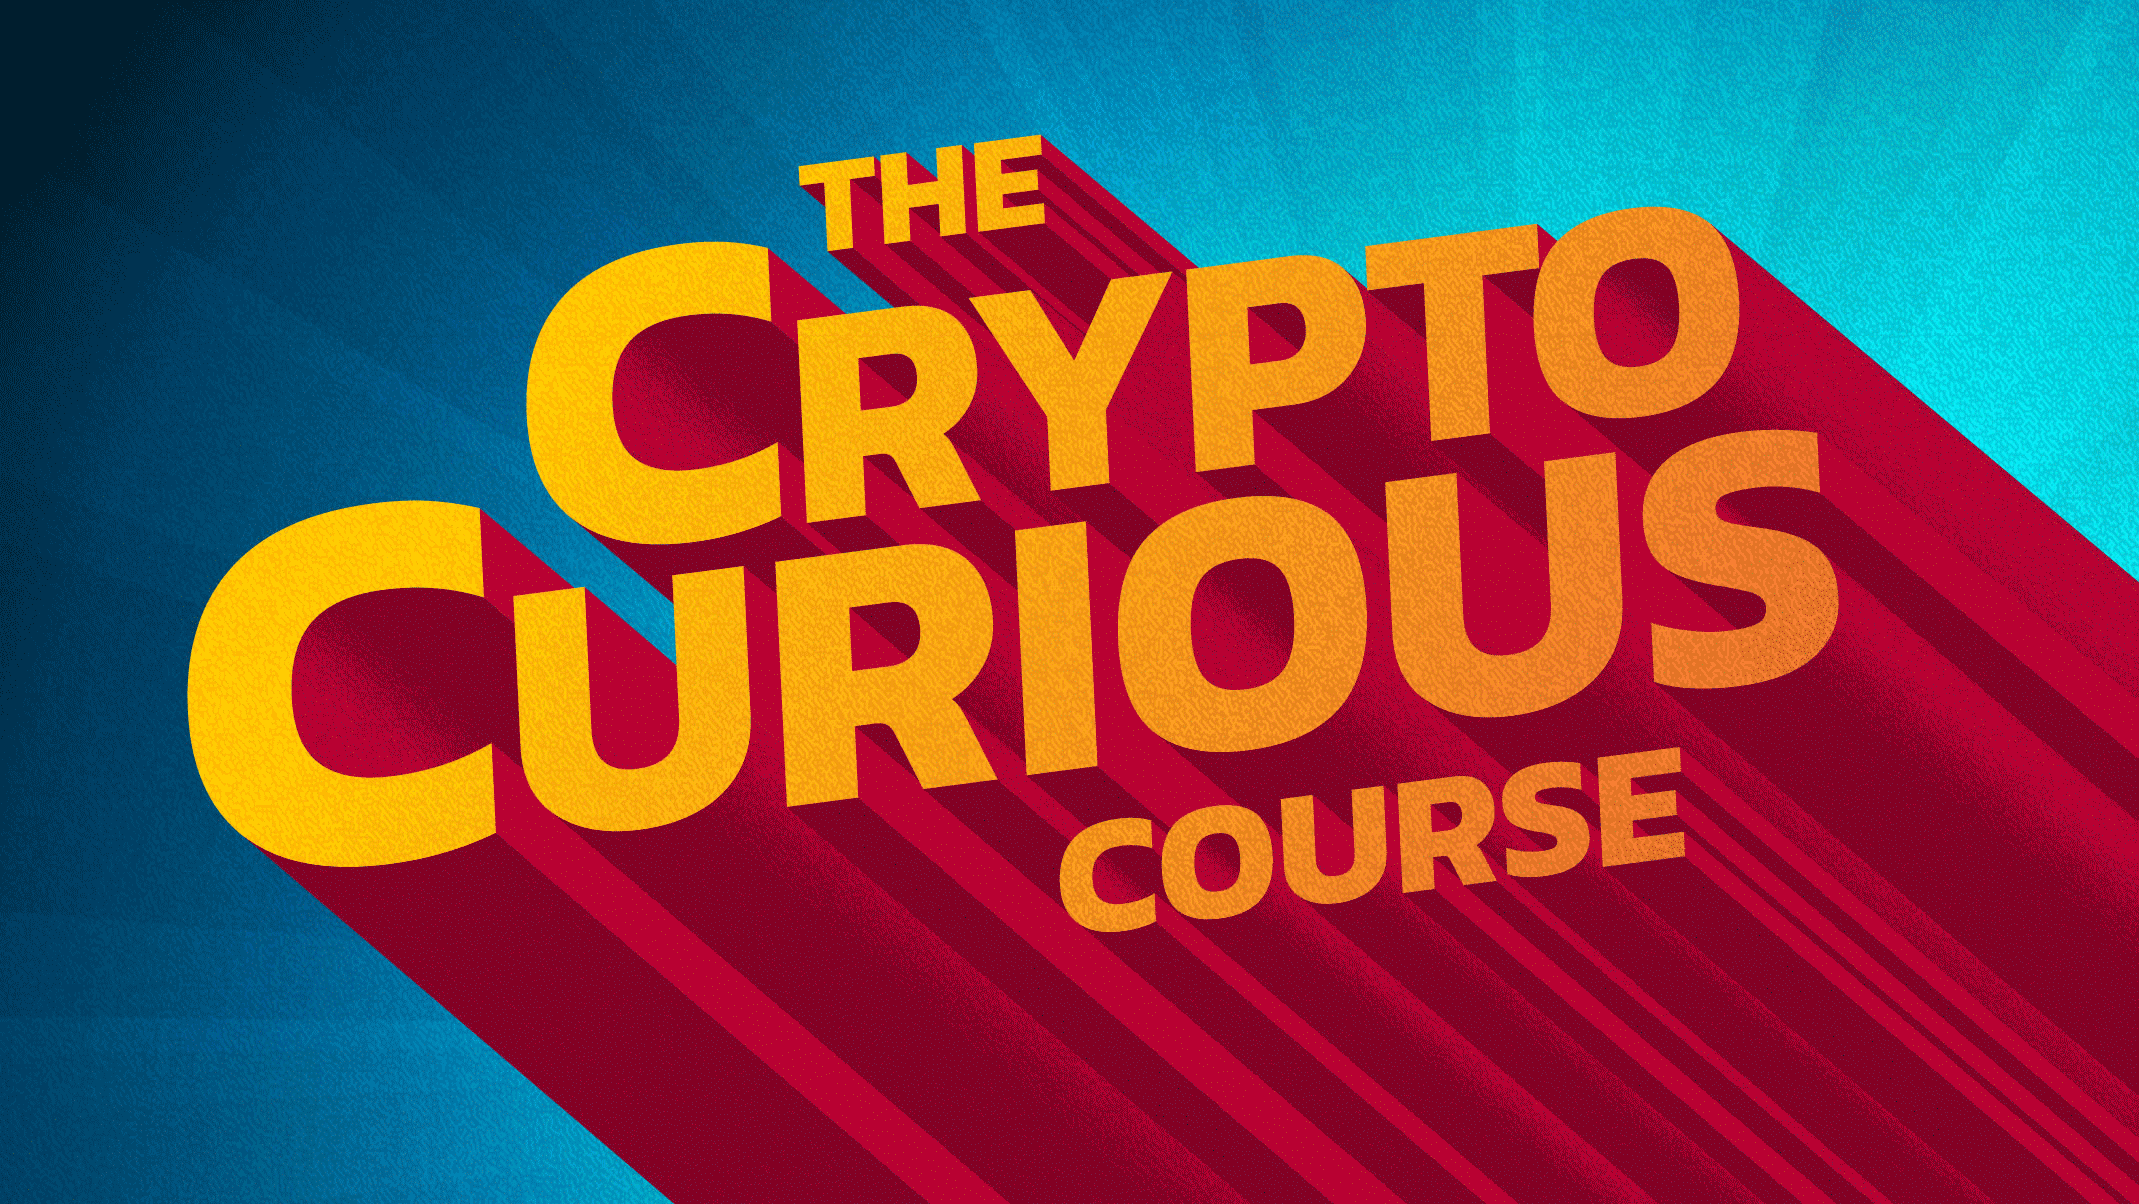 Crypto Curious Course